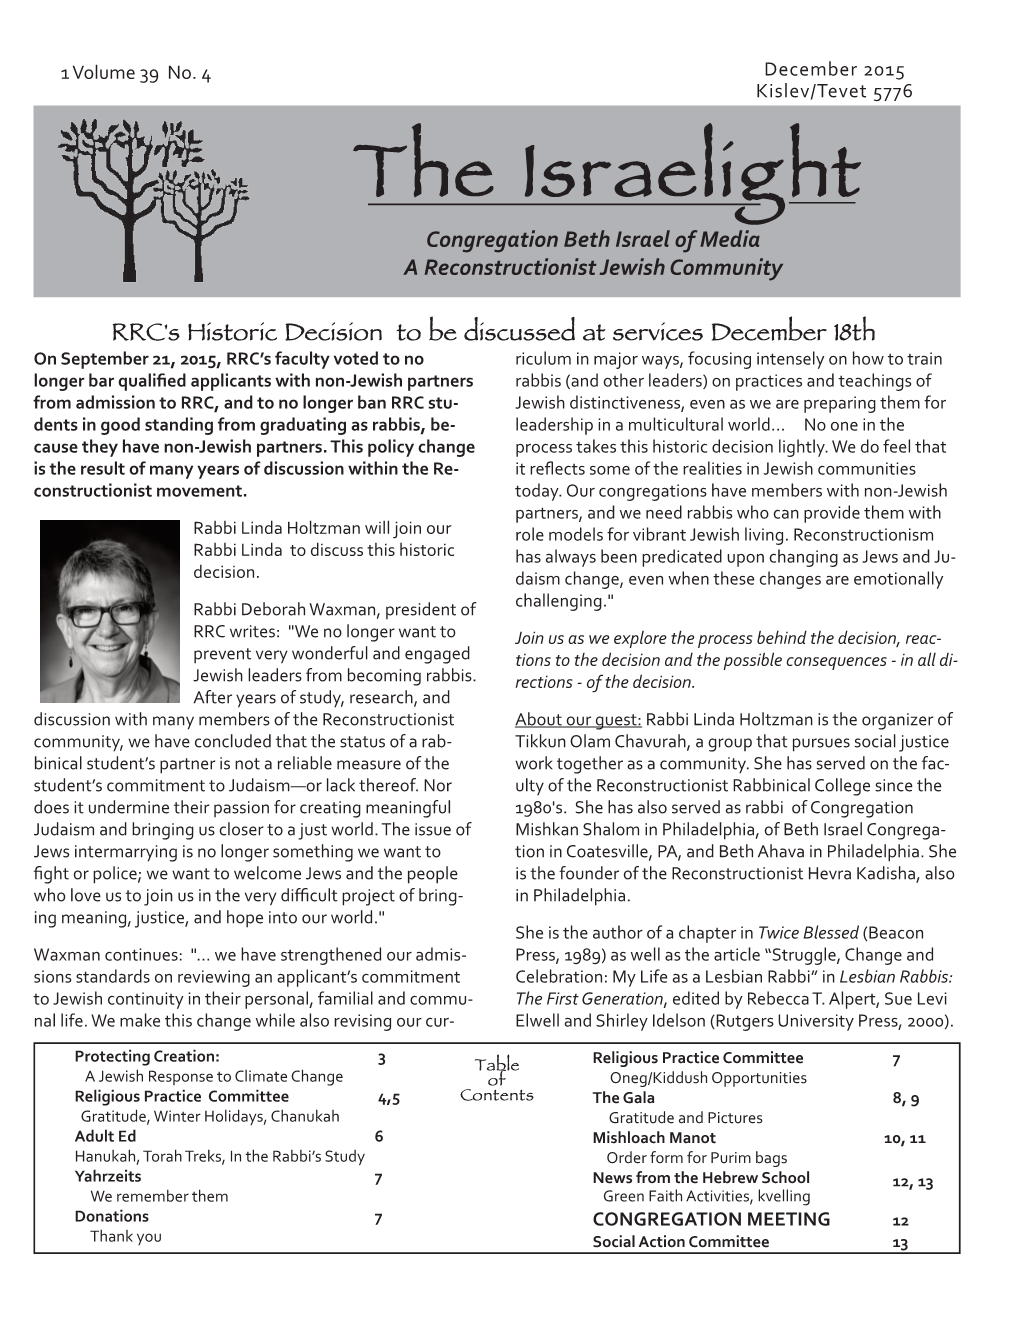 The Israelight Congregation Beth Israel of Media a Reconstructionist Jewish Community